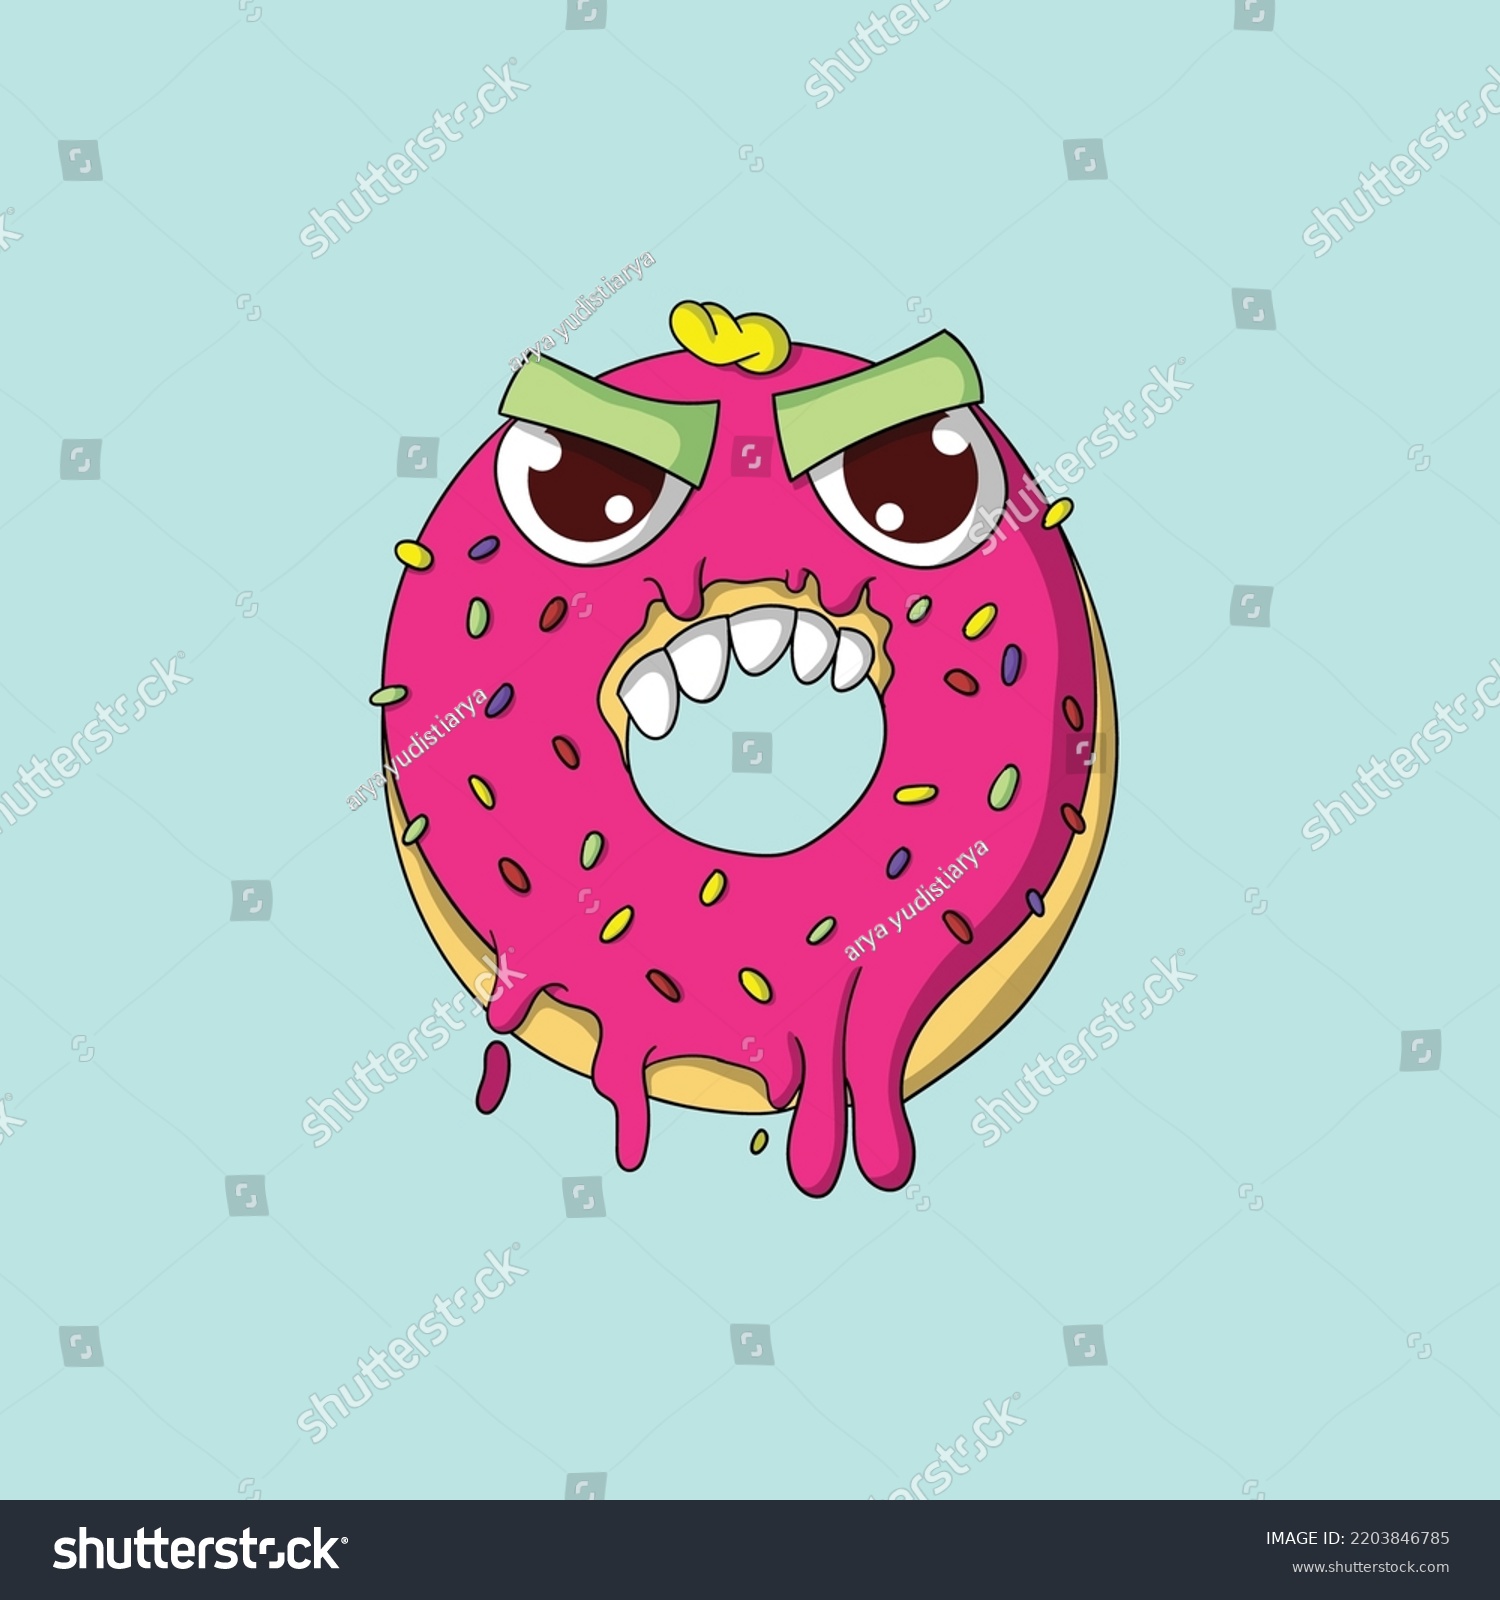 SVG of Angry Donut Food Monster Illustration svg